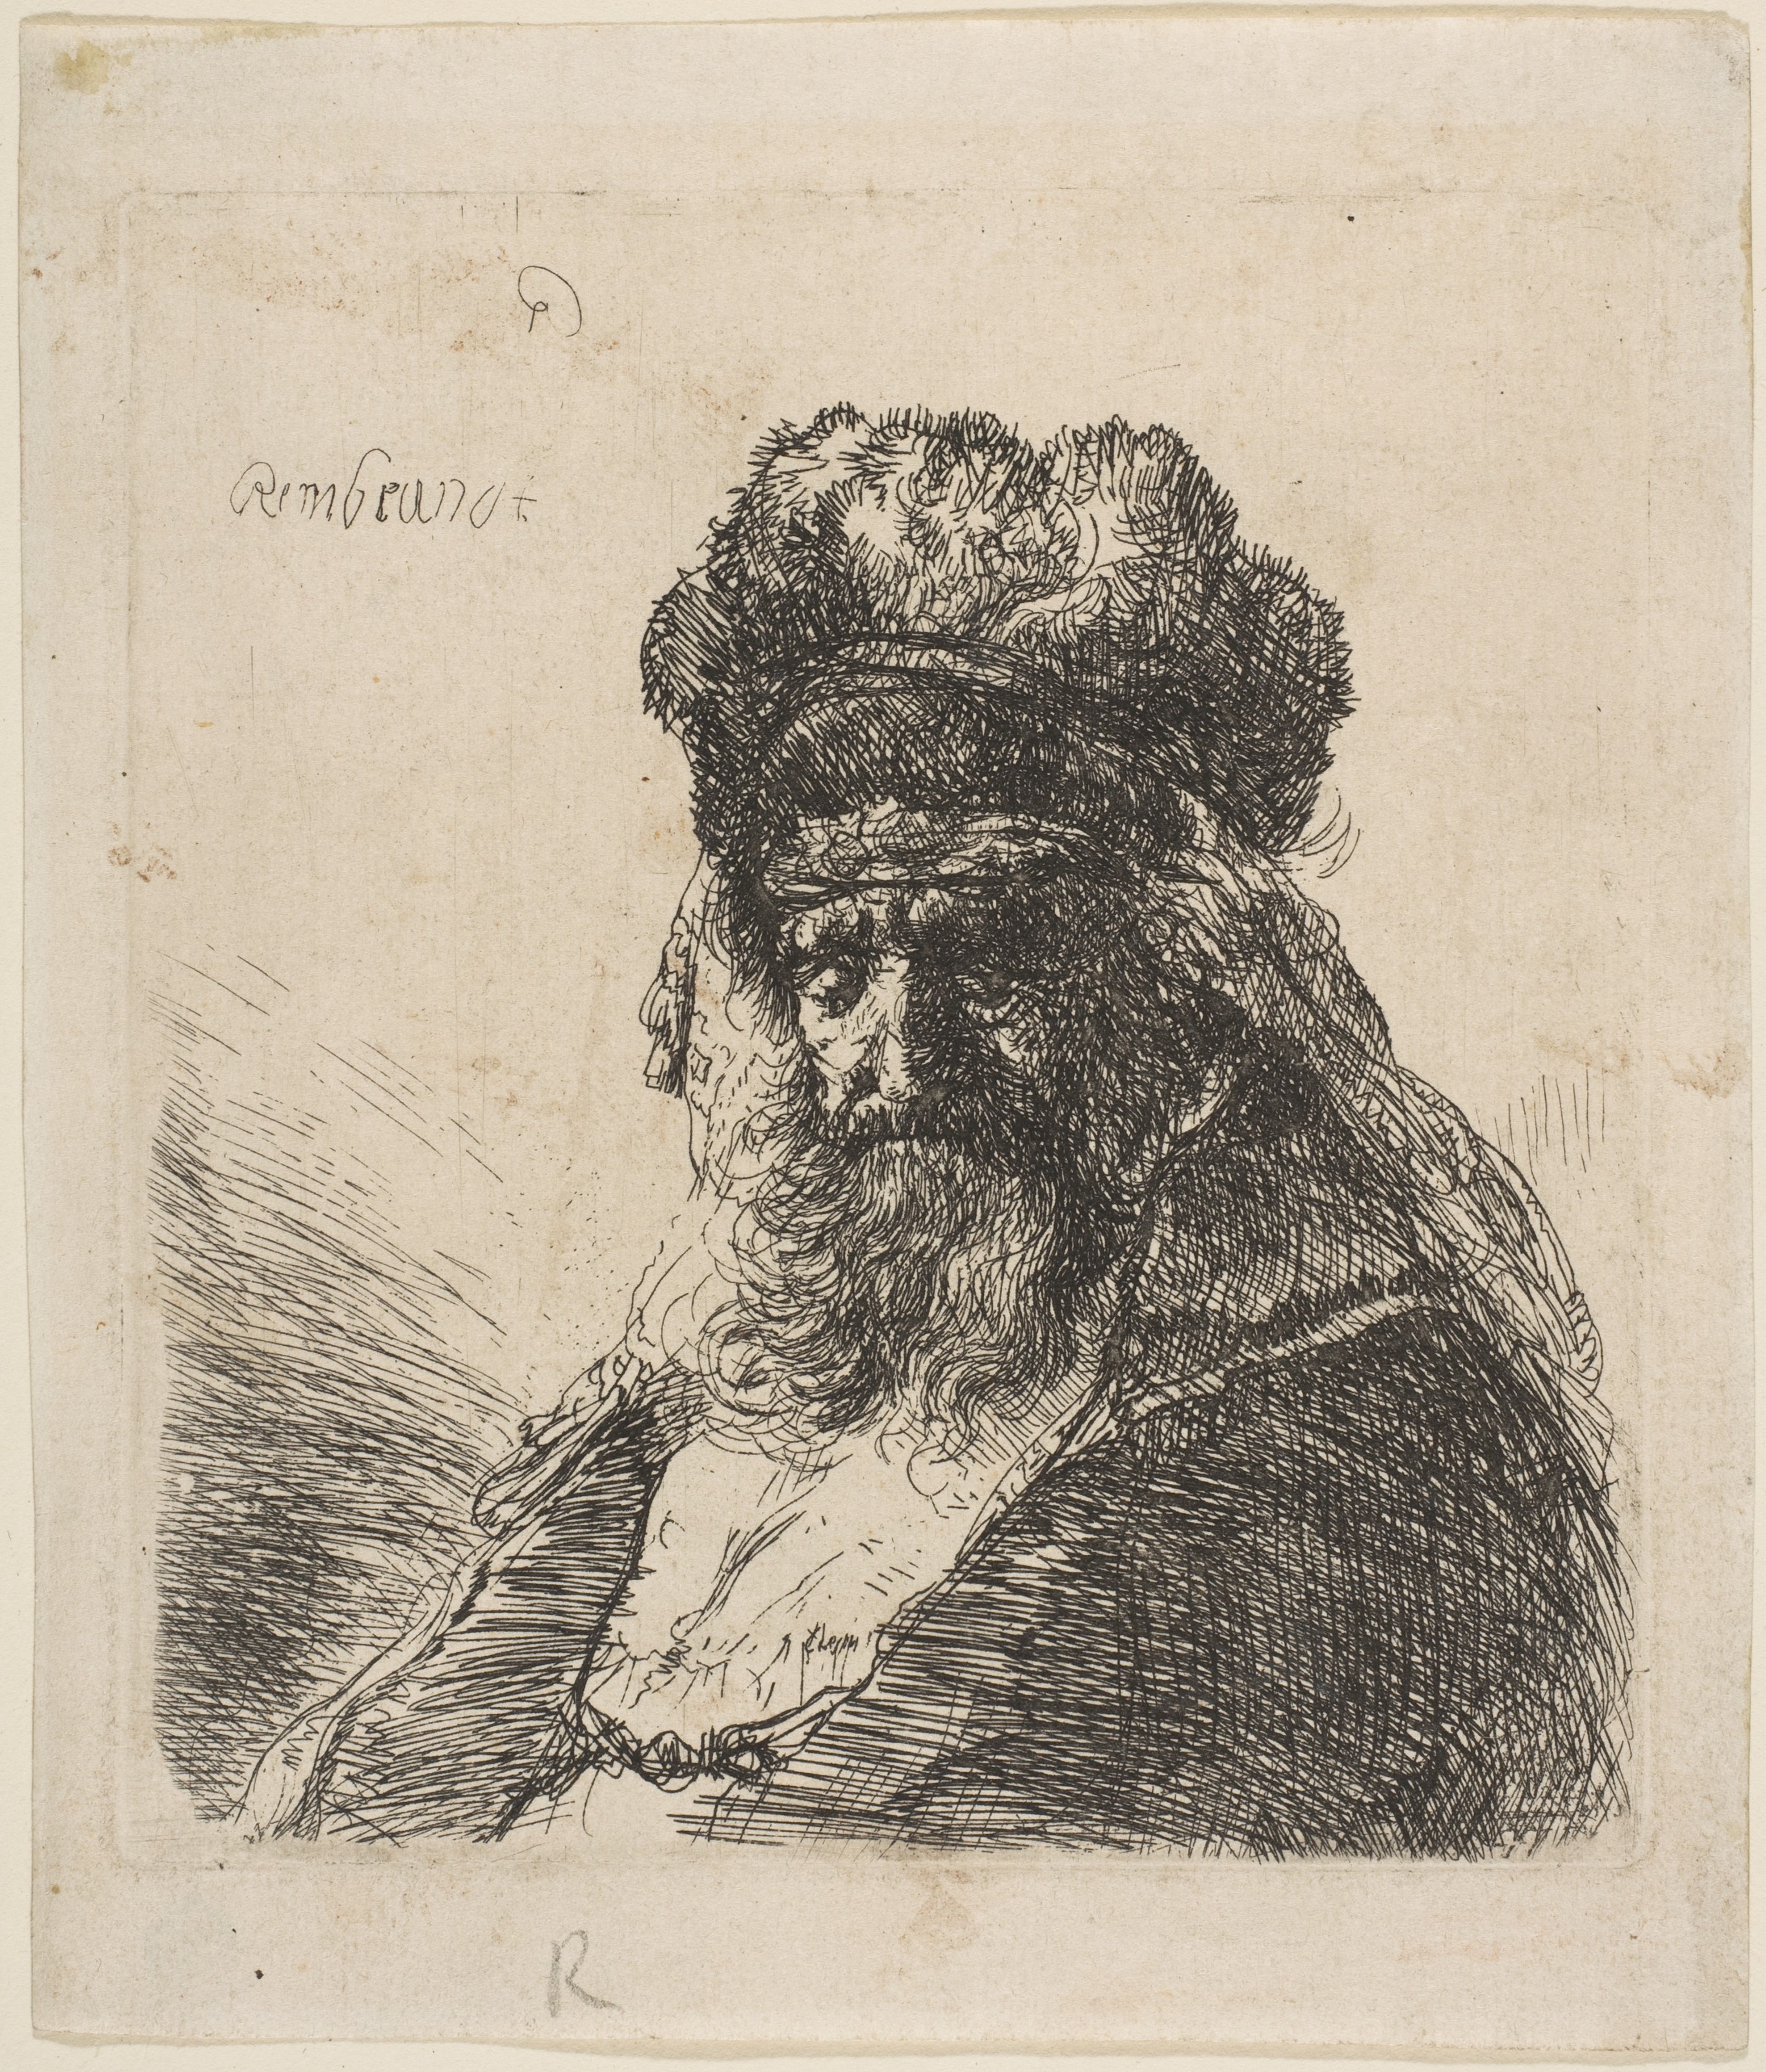 Rembrandt (Rembrandt van Rijn) The Old Bearded Man in a High Fur Cap